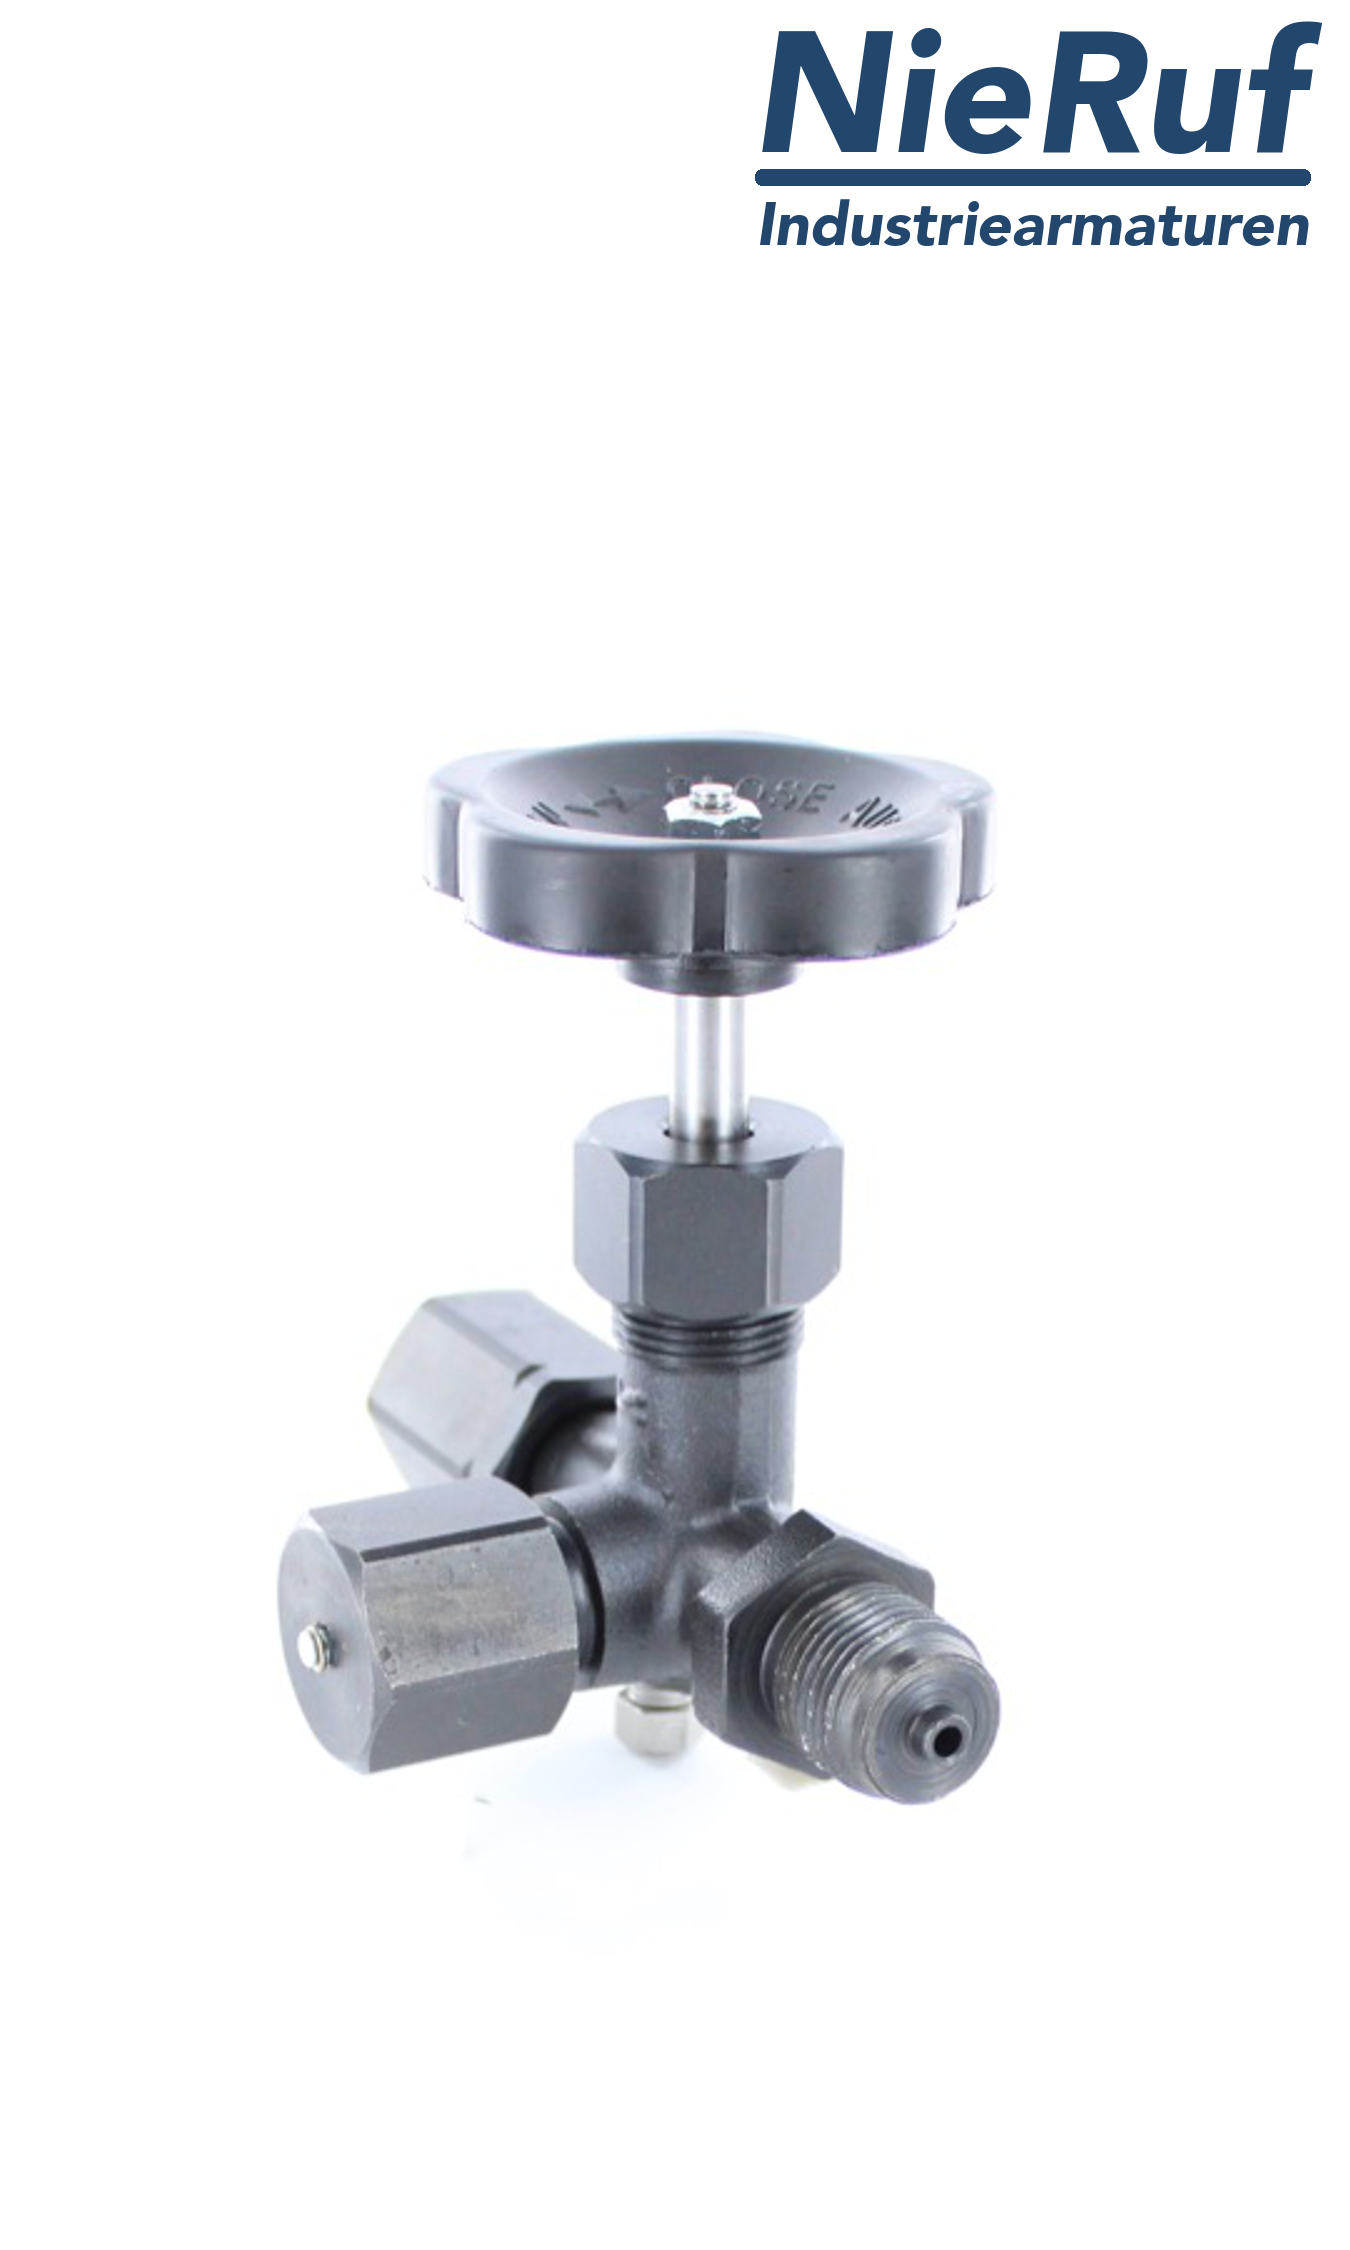 manometer gauge valves male thread x sleeve x test connector M20x1,5 DIN 16271 steel 1.0460 400 bar